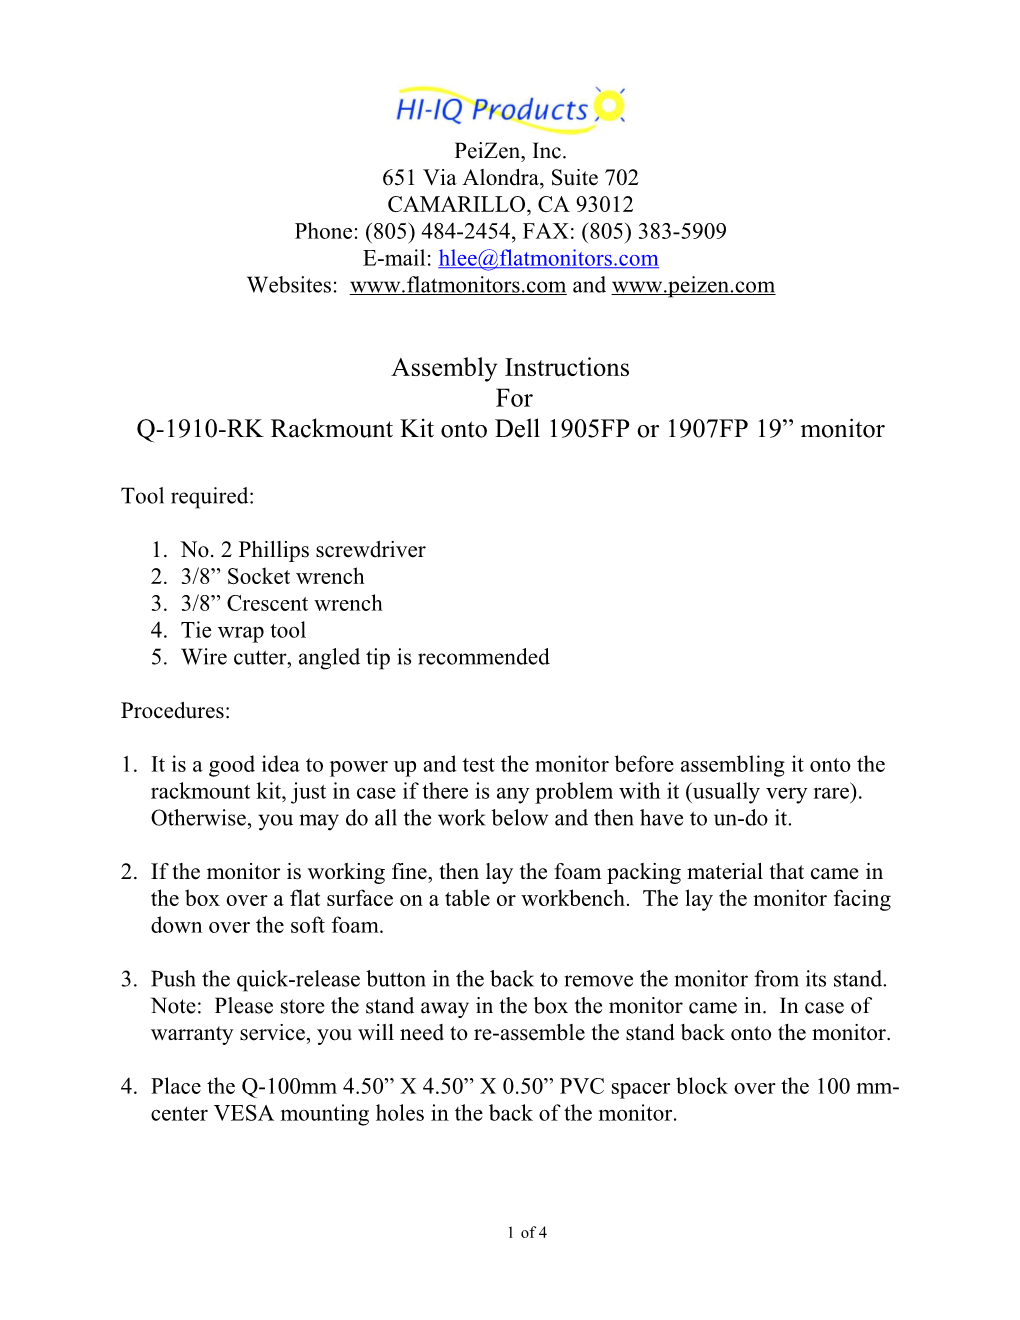 Assembly Instructions for the Q-1500-RK Rackmount Kit